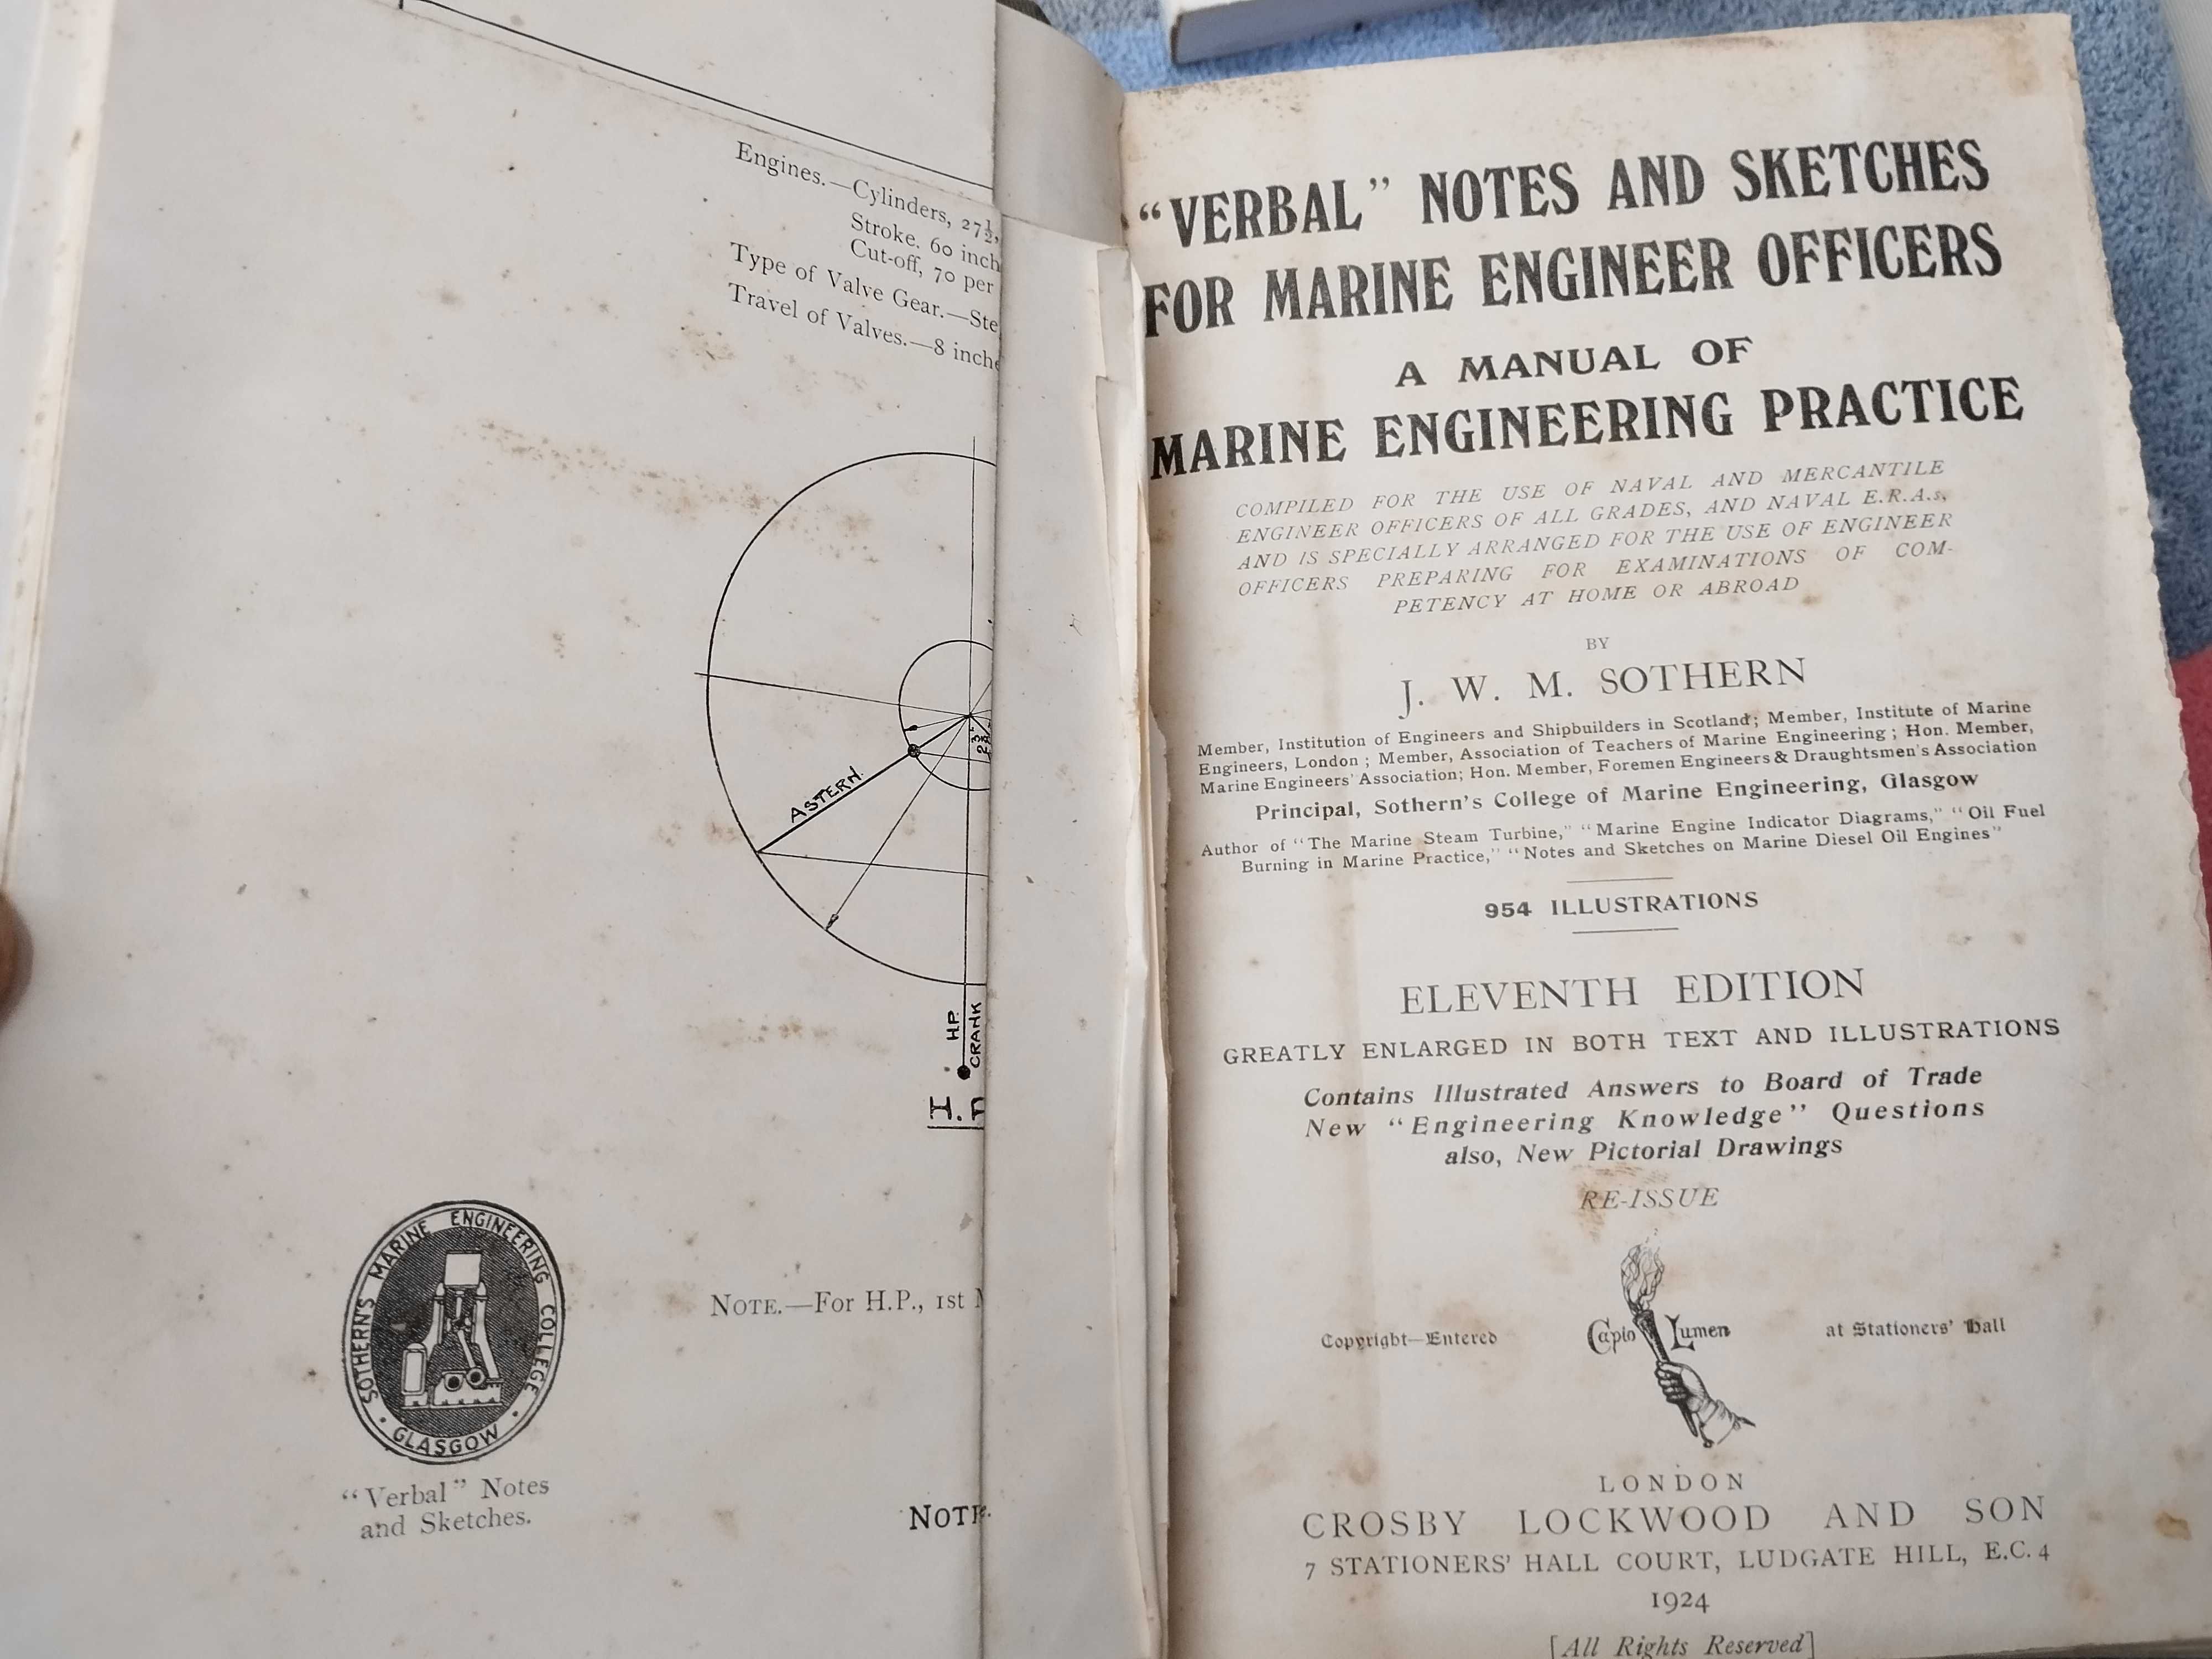 Livro Manual of Marine Engineering